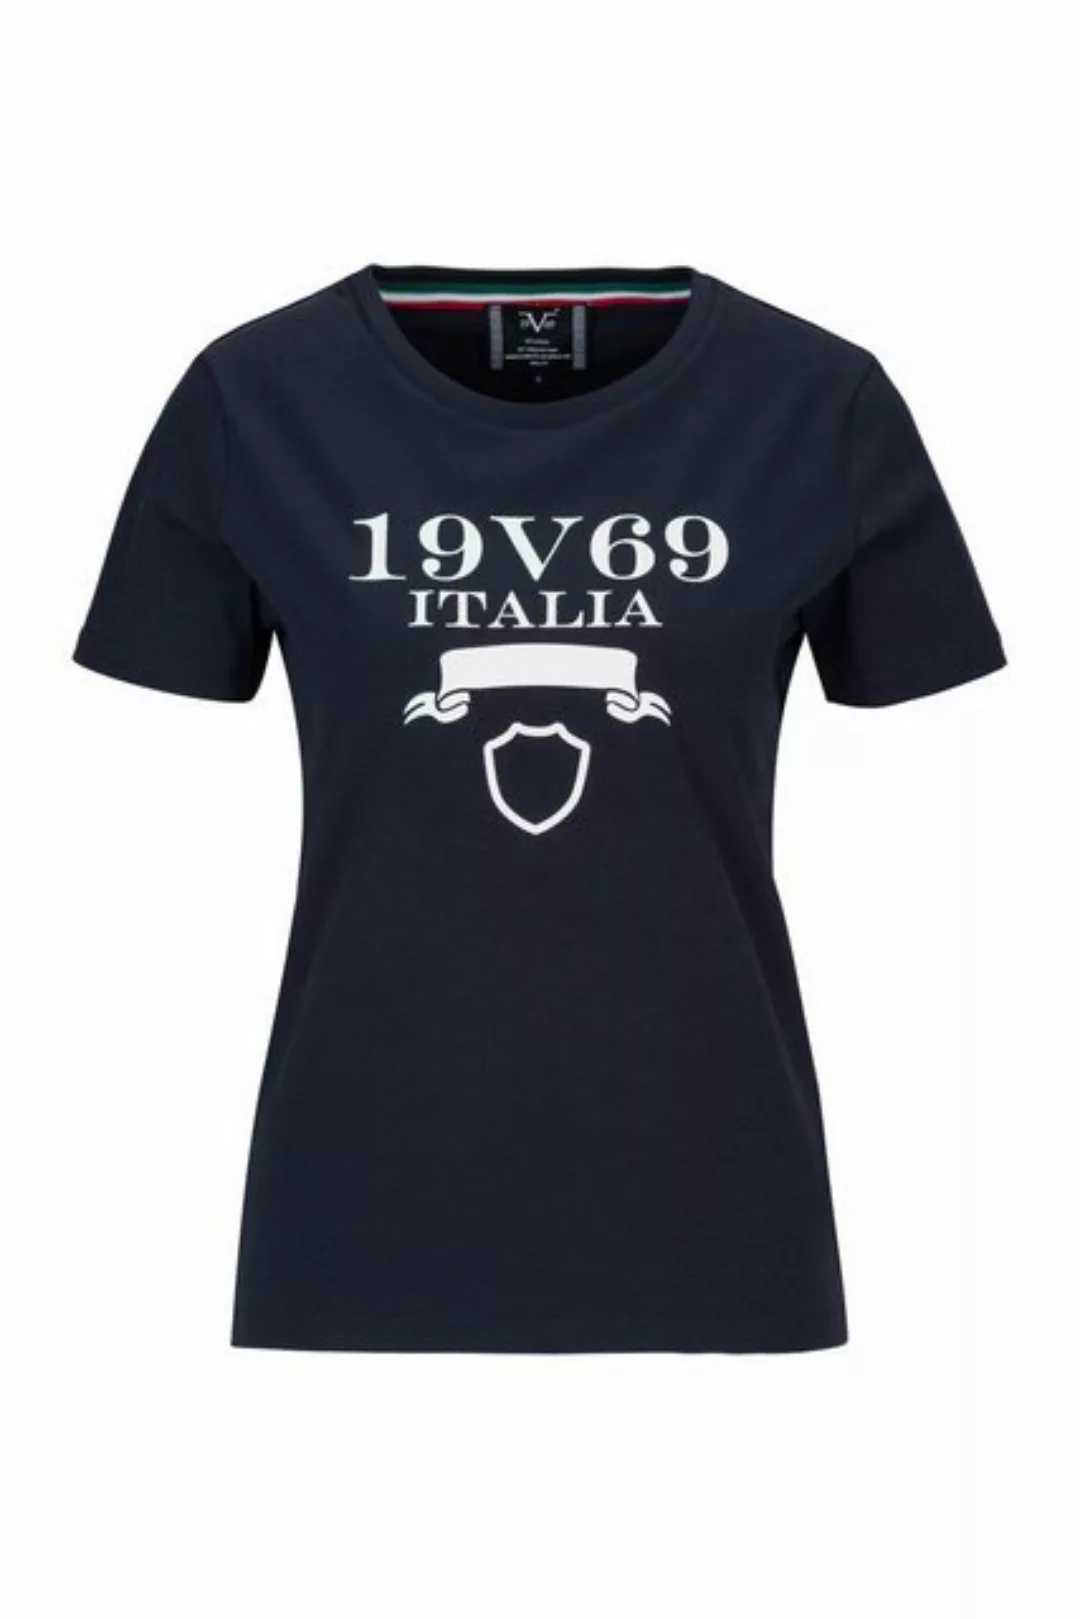 19V69 Italia by Versace T-Shirt TAMLYN Damen Shirt mit Logo-Print (XS-XXL) günstig online kaufen